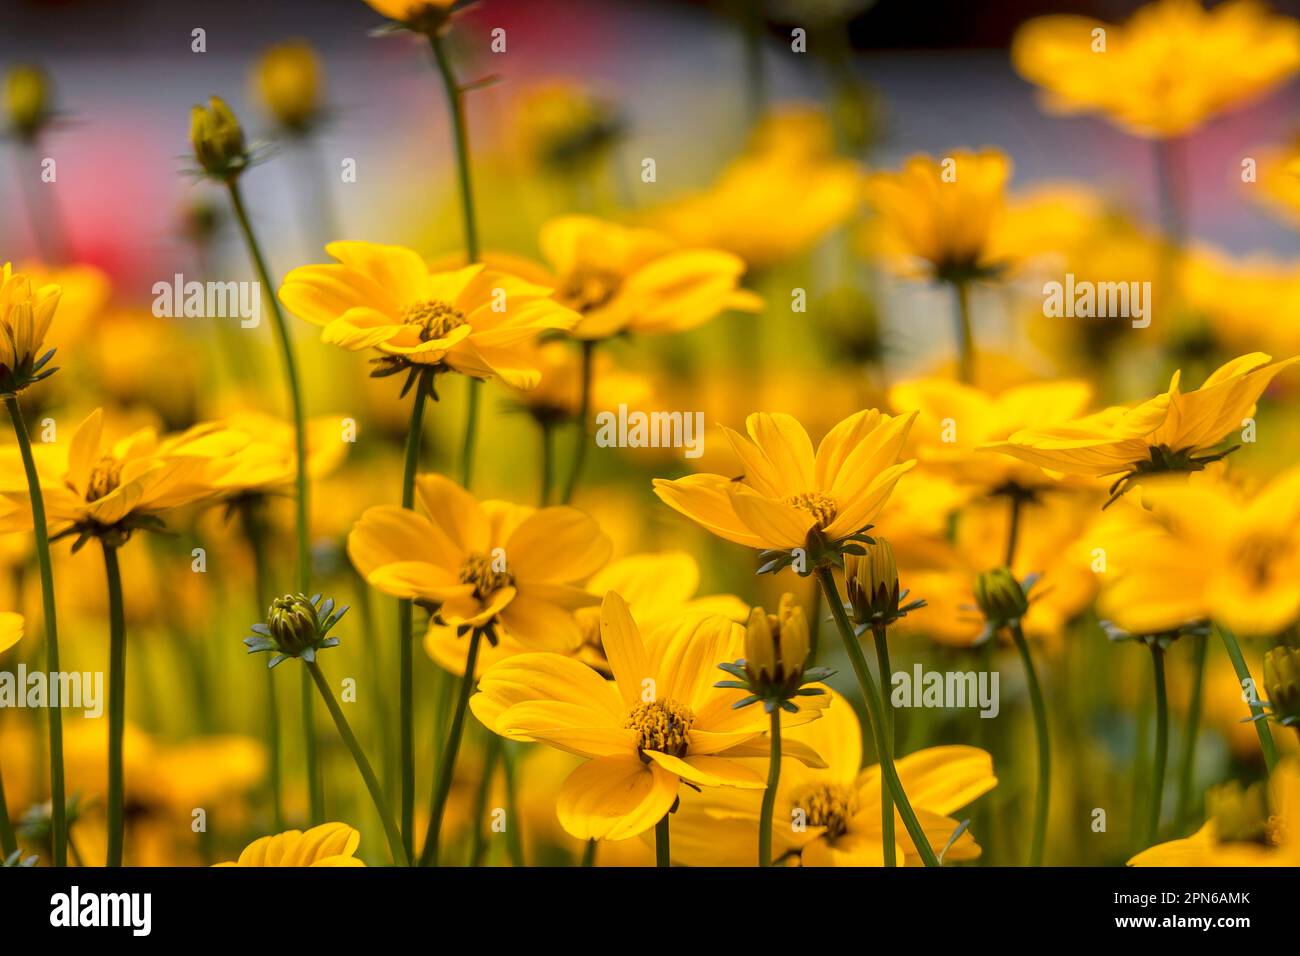 Bidens ferulifolia or Golden Nugget or Verbena Amarilla yellow flowers in garden flowerbed. Selective focus Stock Photo